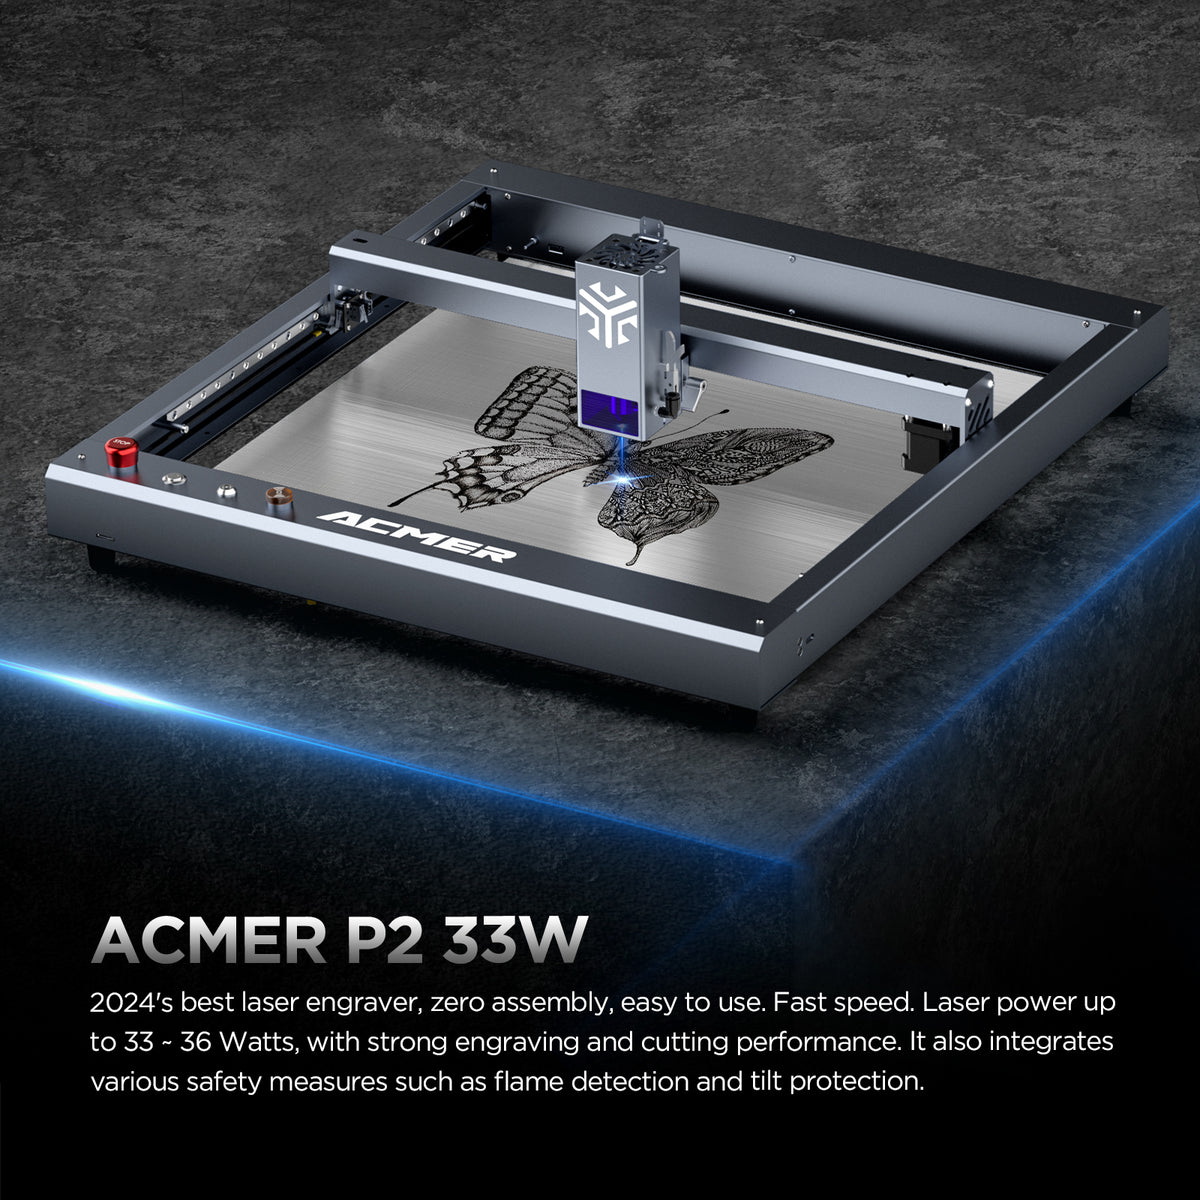 Laser 8570 Engine Timing Master Kit – for PSA 1.0, 1.2 EB2 Petrol